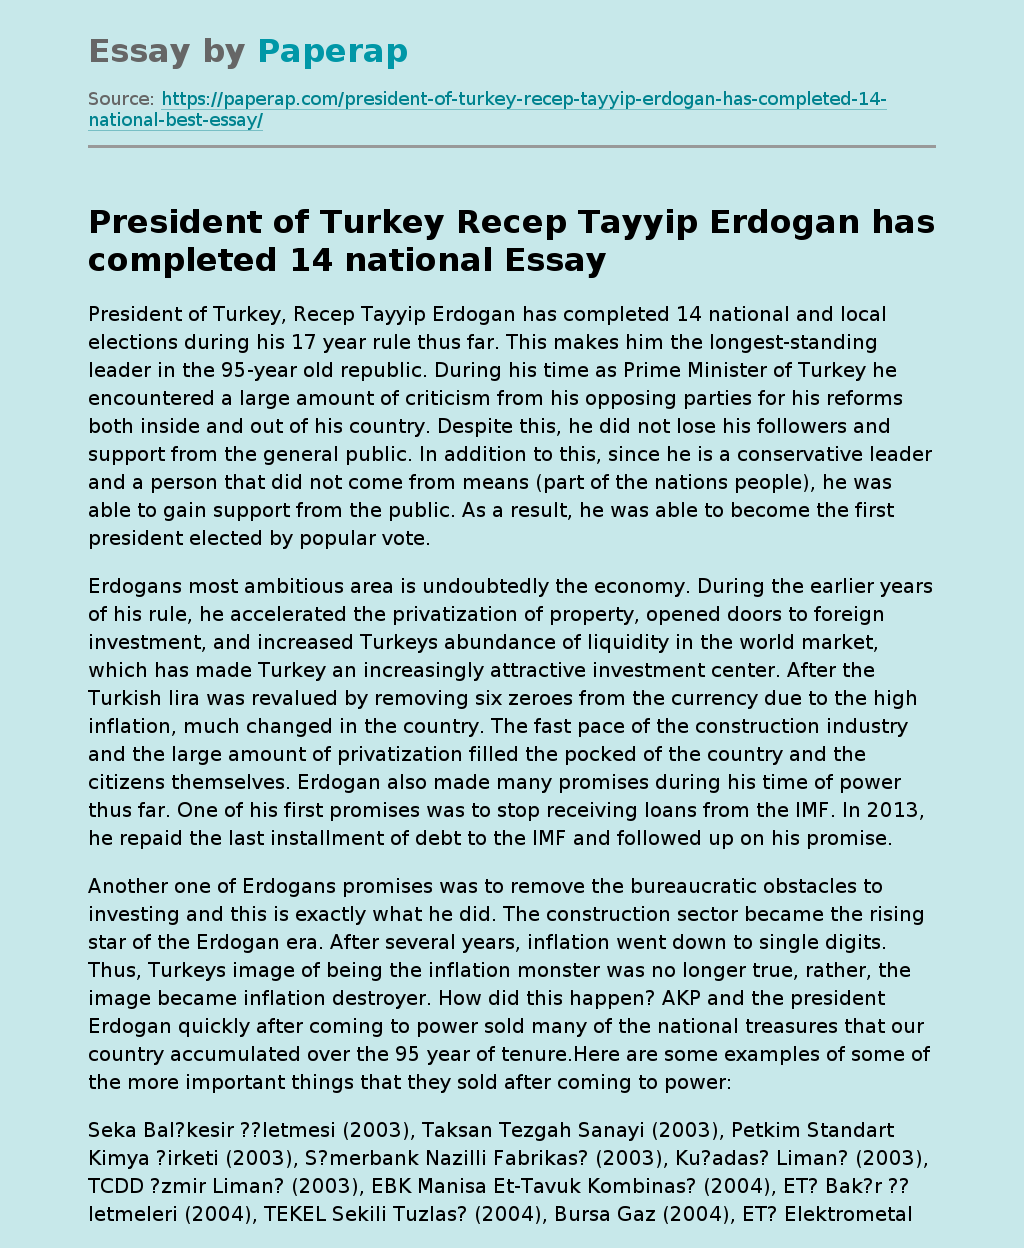 President of Turkey Recep Tayyip Erdogan has completed 14 national